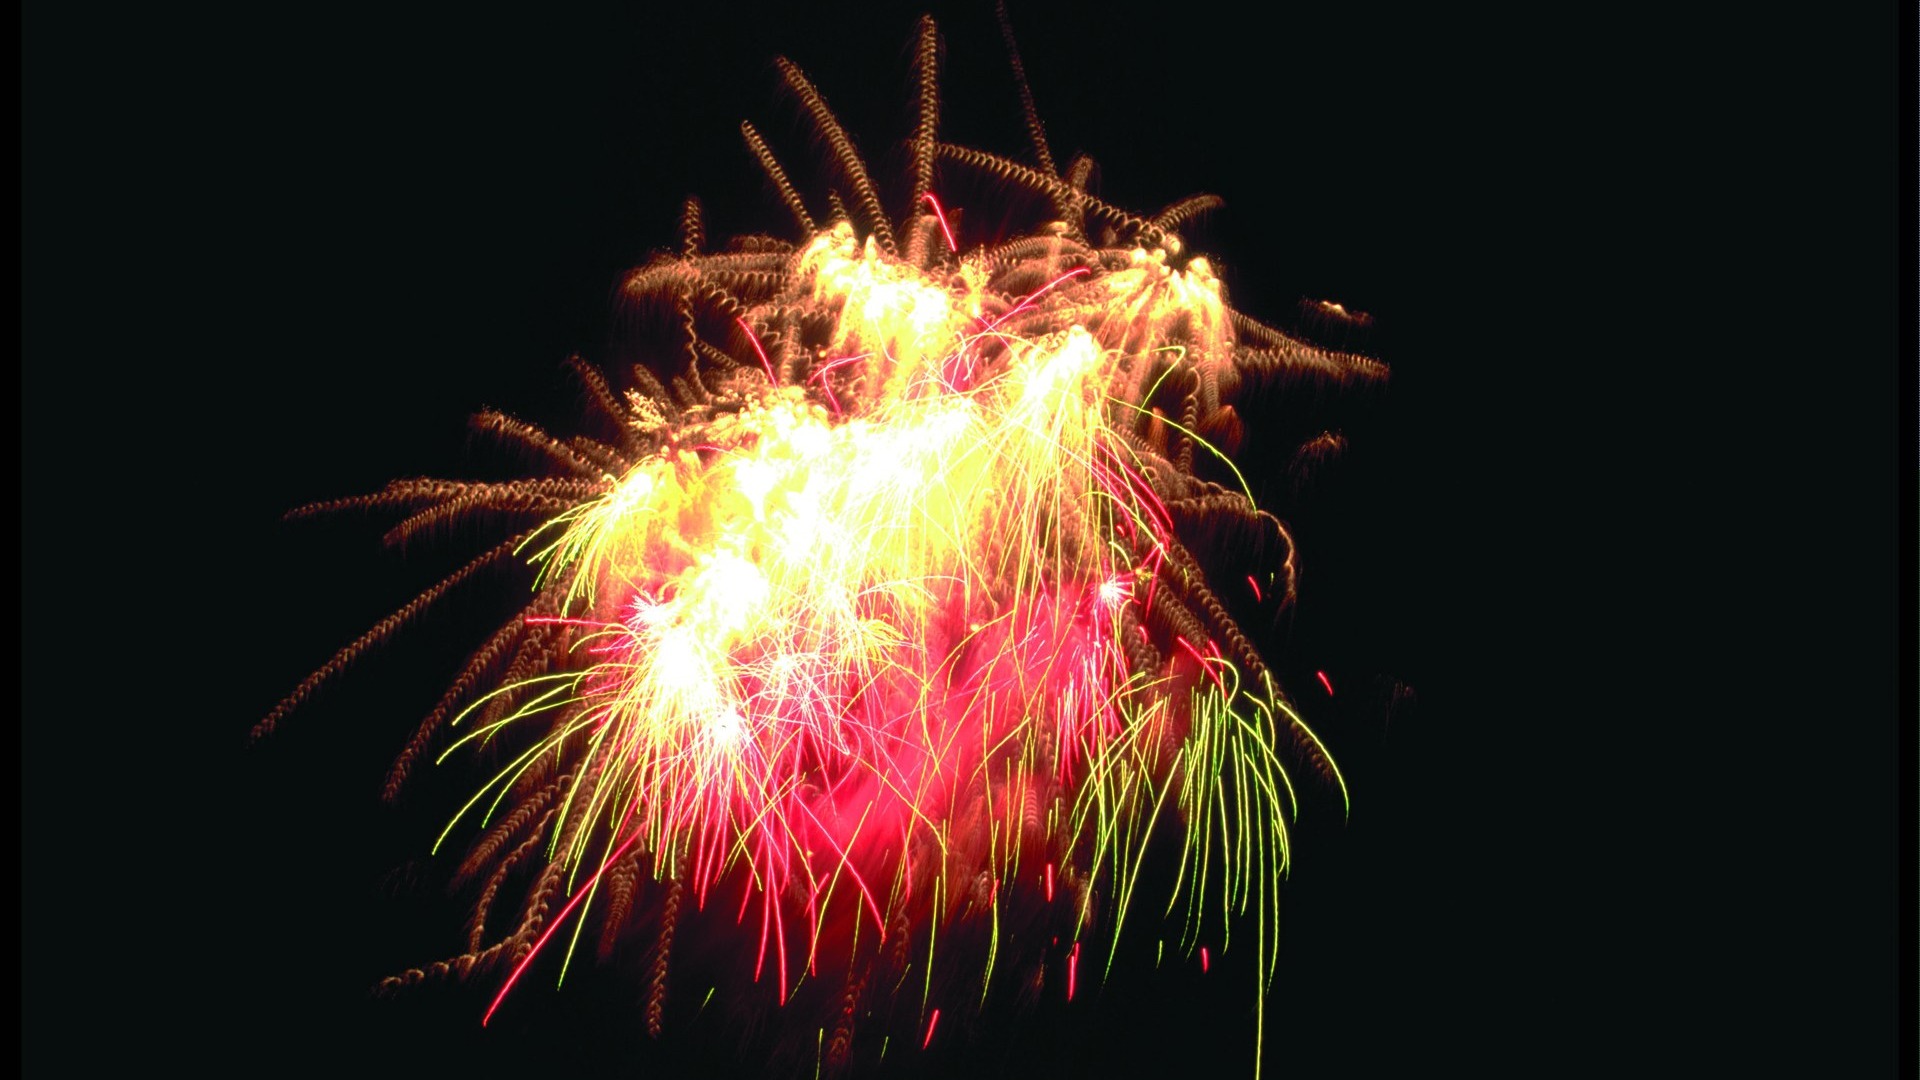 Festival fireworks display wallpaper #44 - 1920x1080